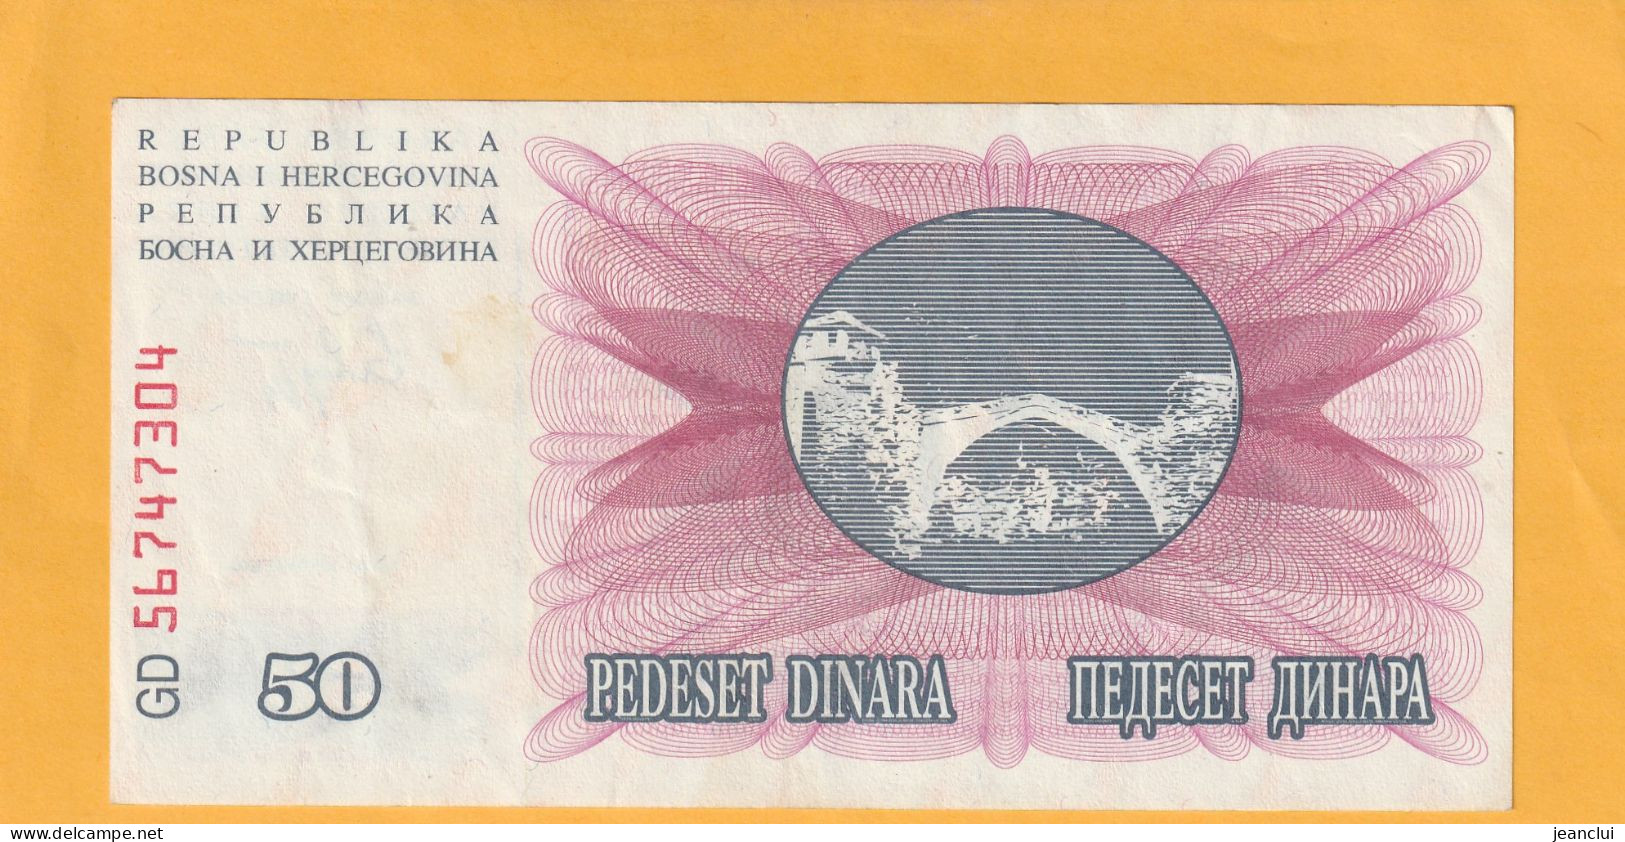 NARODNA BANKA BOSNE I HERCEGOVINE  .  50 DINARA  . 1-7-1992  .  N°  56 74 7304  .  2 SCANNES  .  BILLET EN TRES BEL ETAT - Bosnia Y Herzegovina